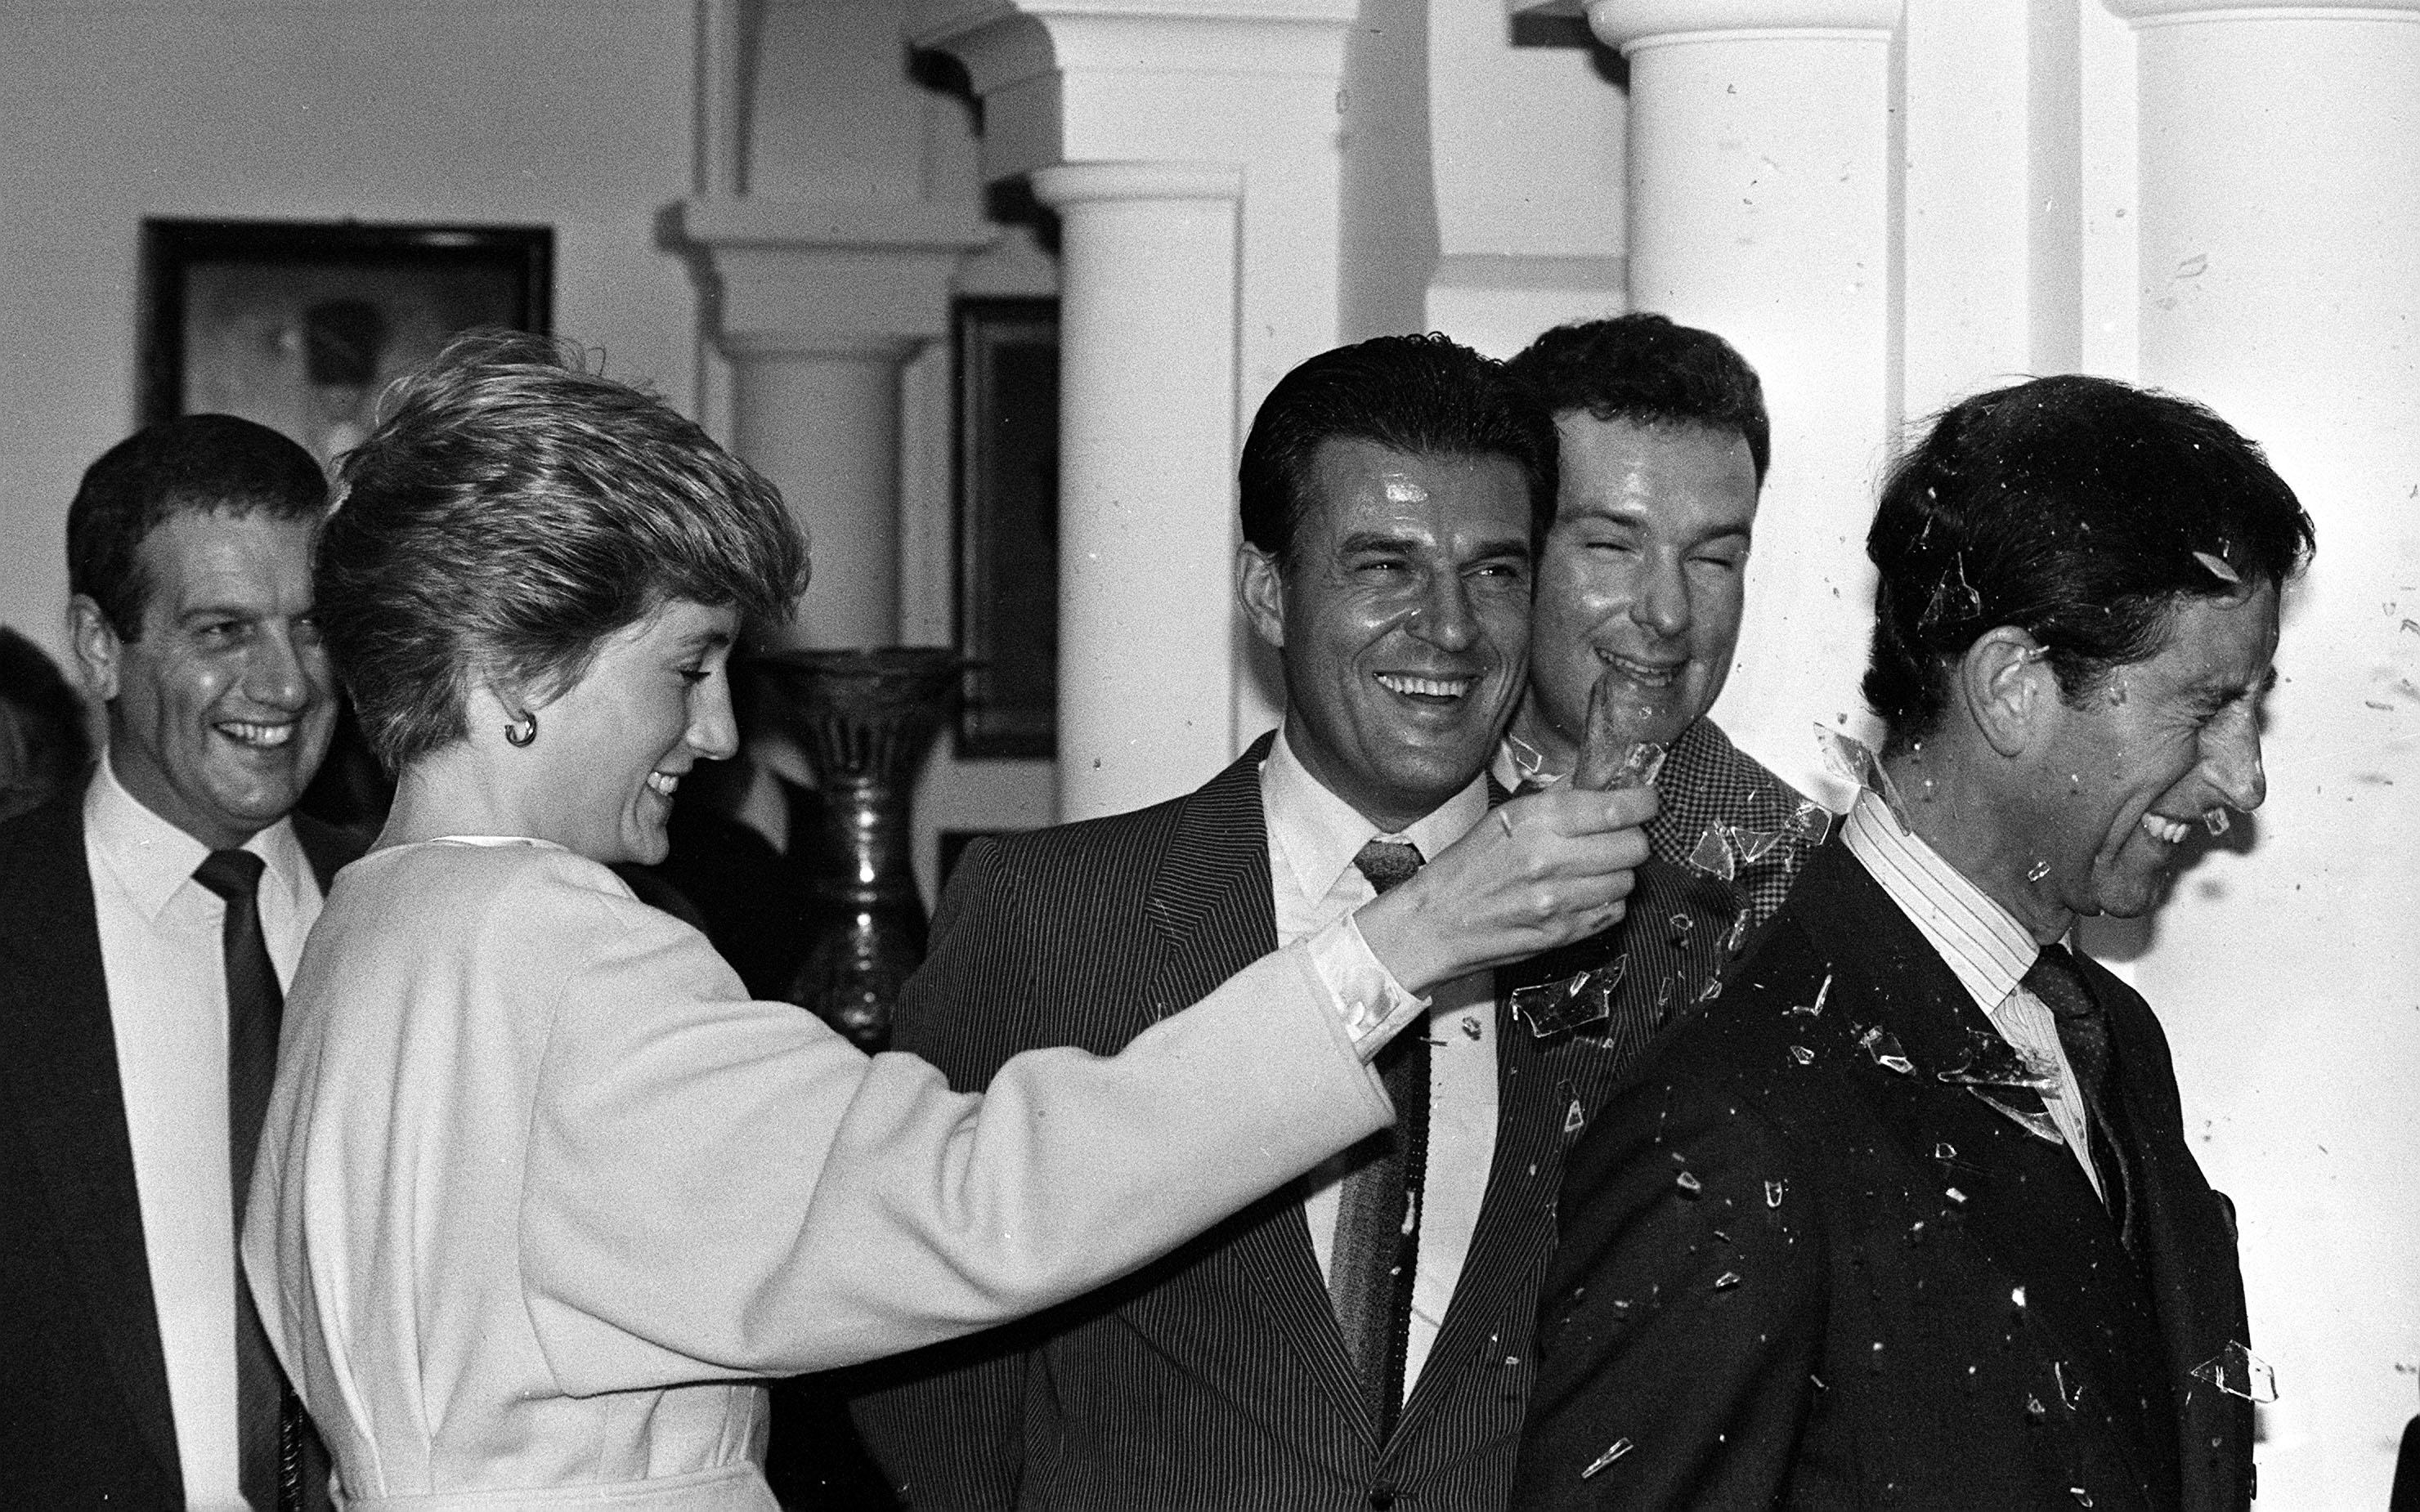 Princess Diana breaks a bottle over Prince Charles' head